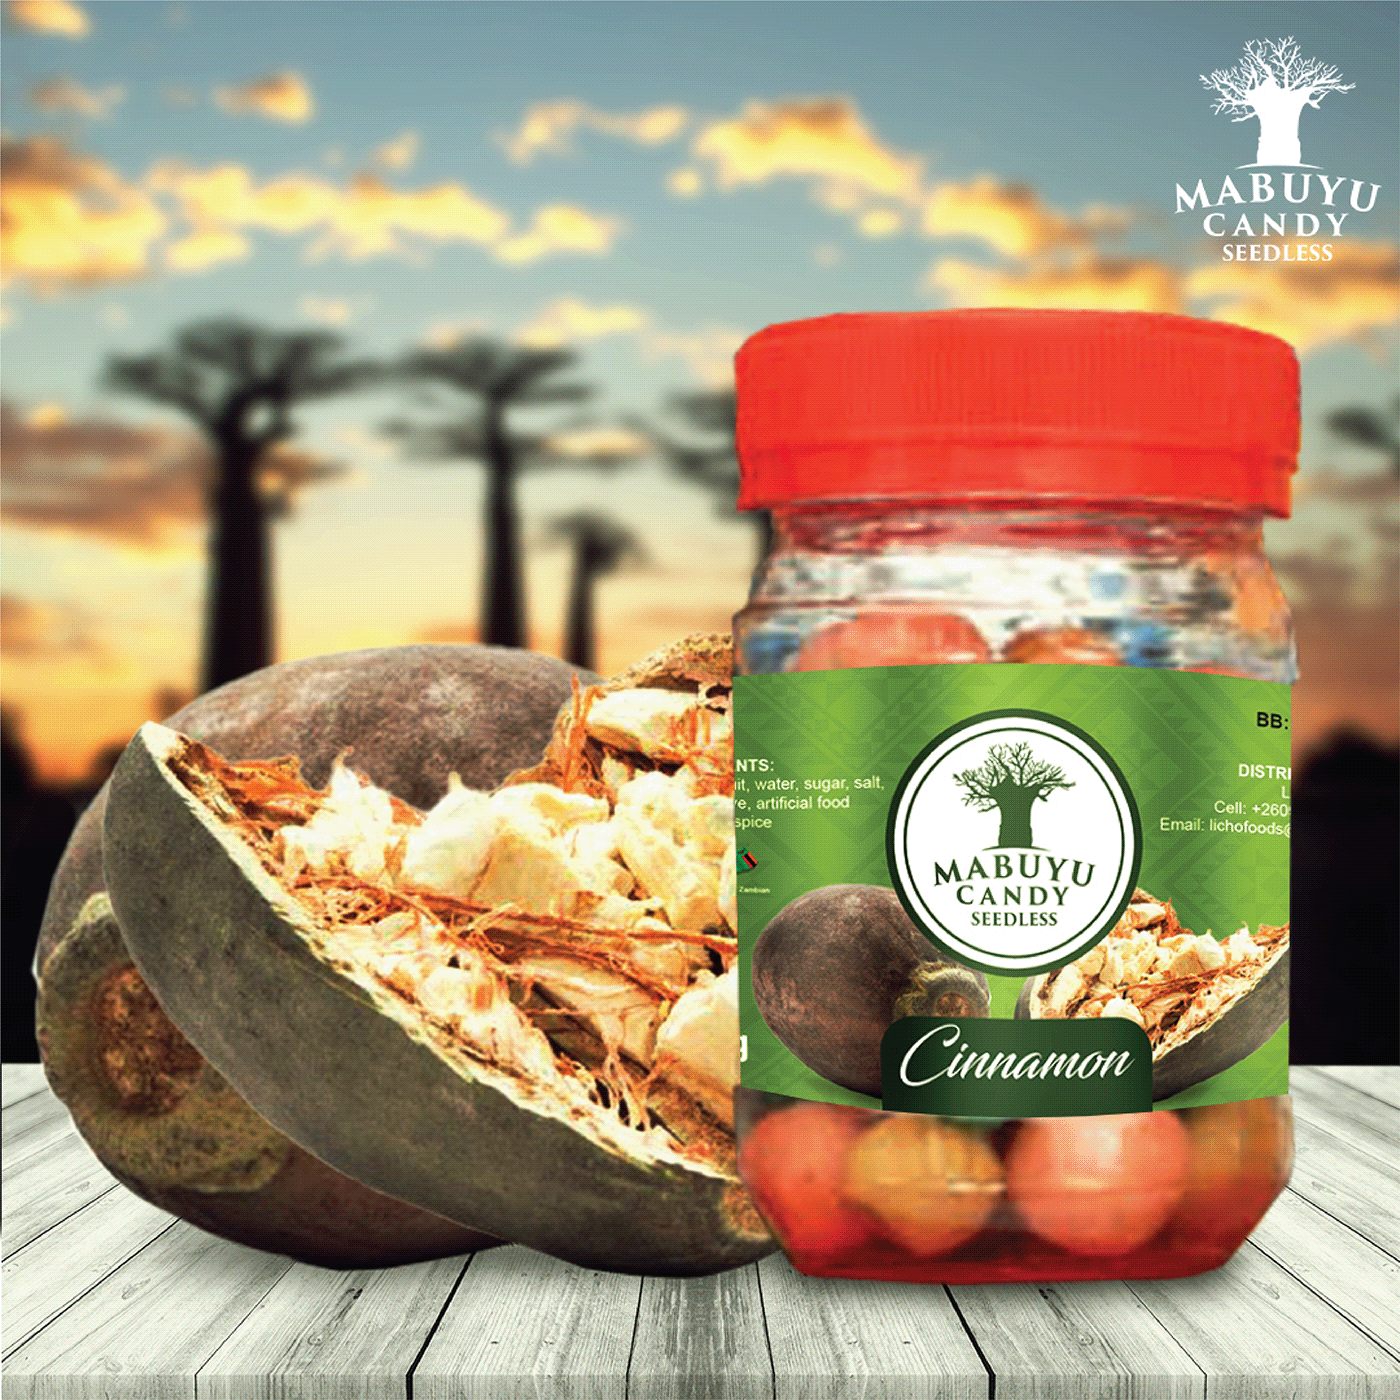 africa Afrocentric baobab branding  Candy design Label mabuyu Packaging Traditional medicine